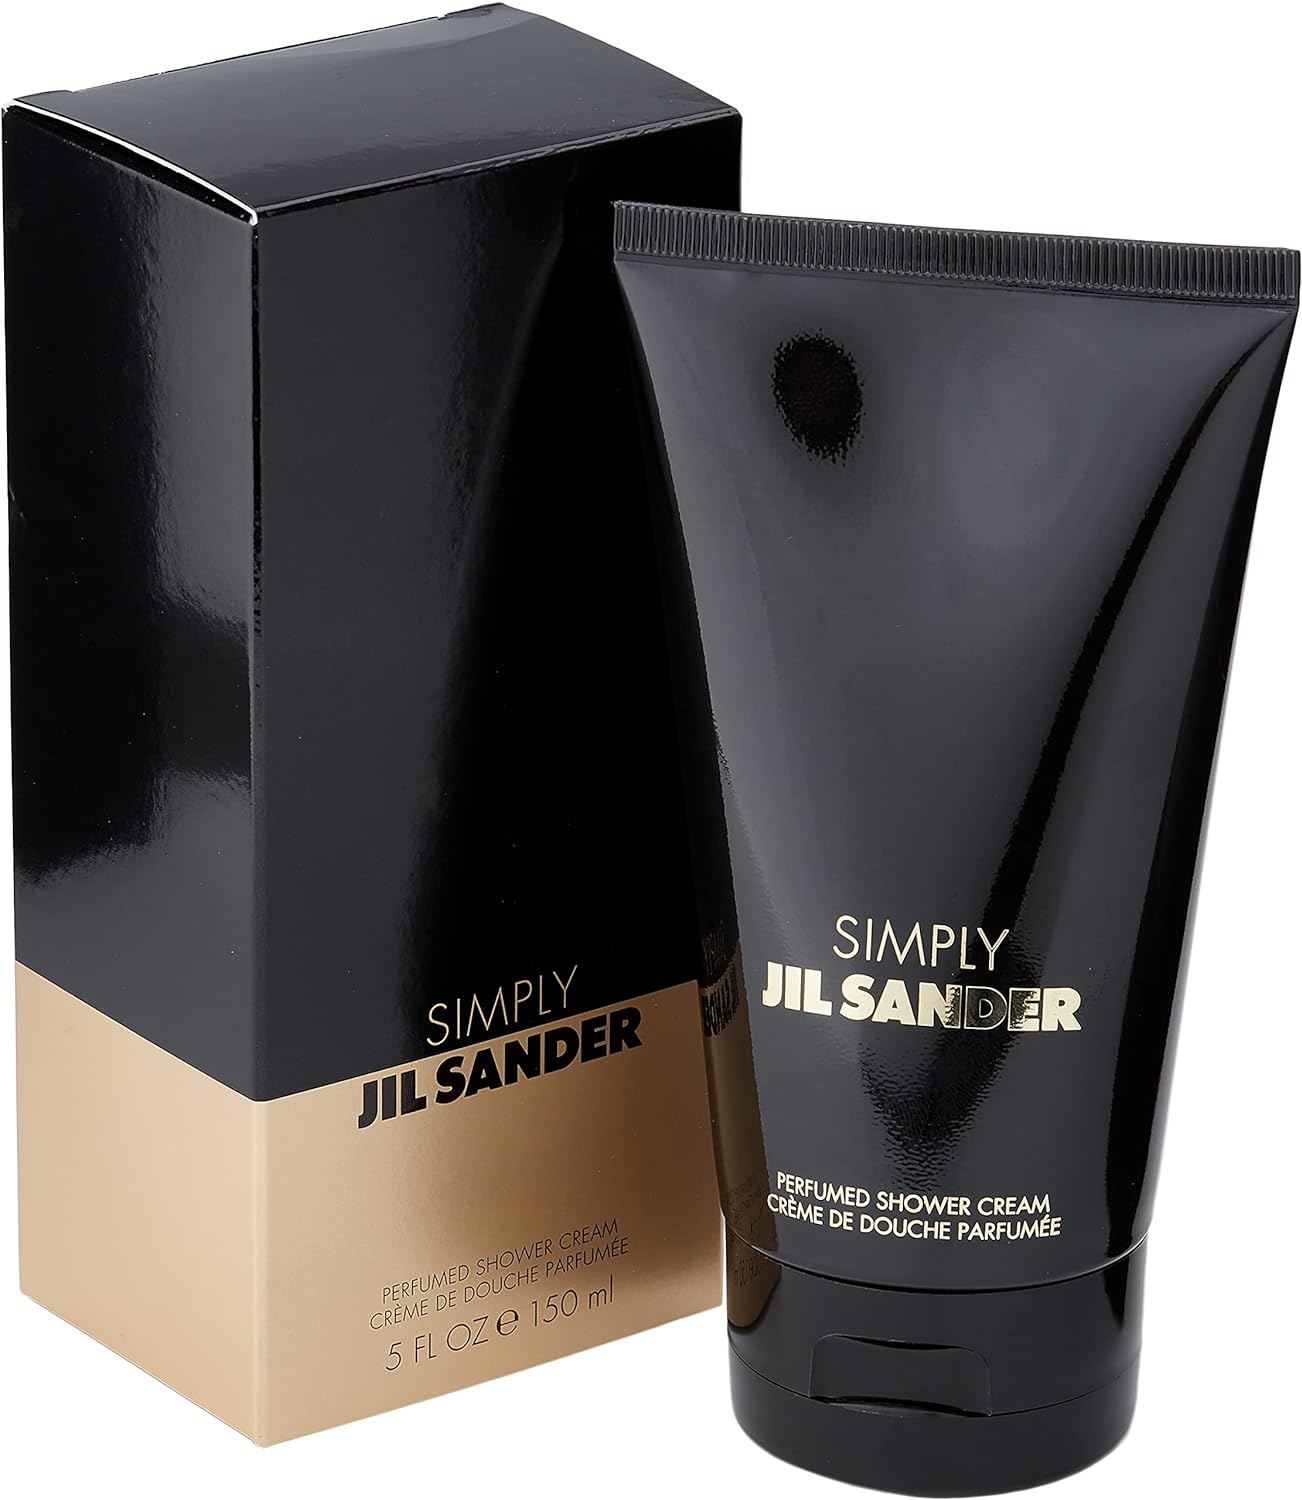 Jil Sander Simply Perfumed Shower Cream 150Ml, 5